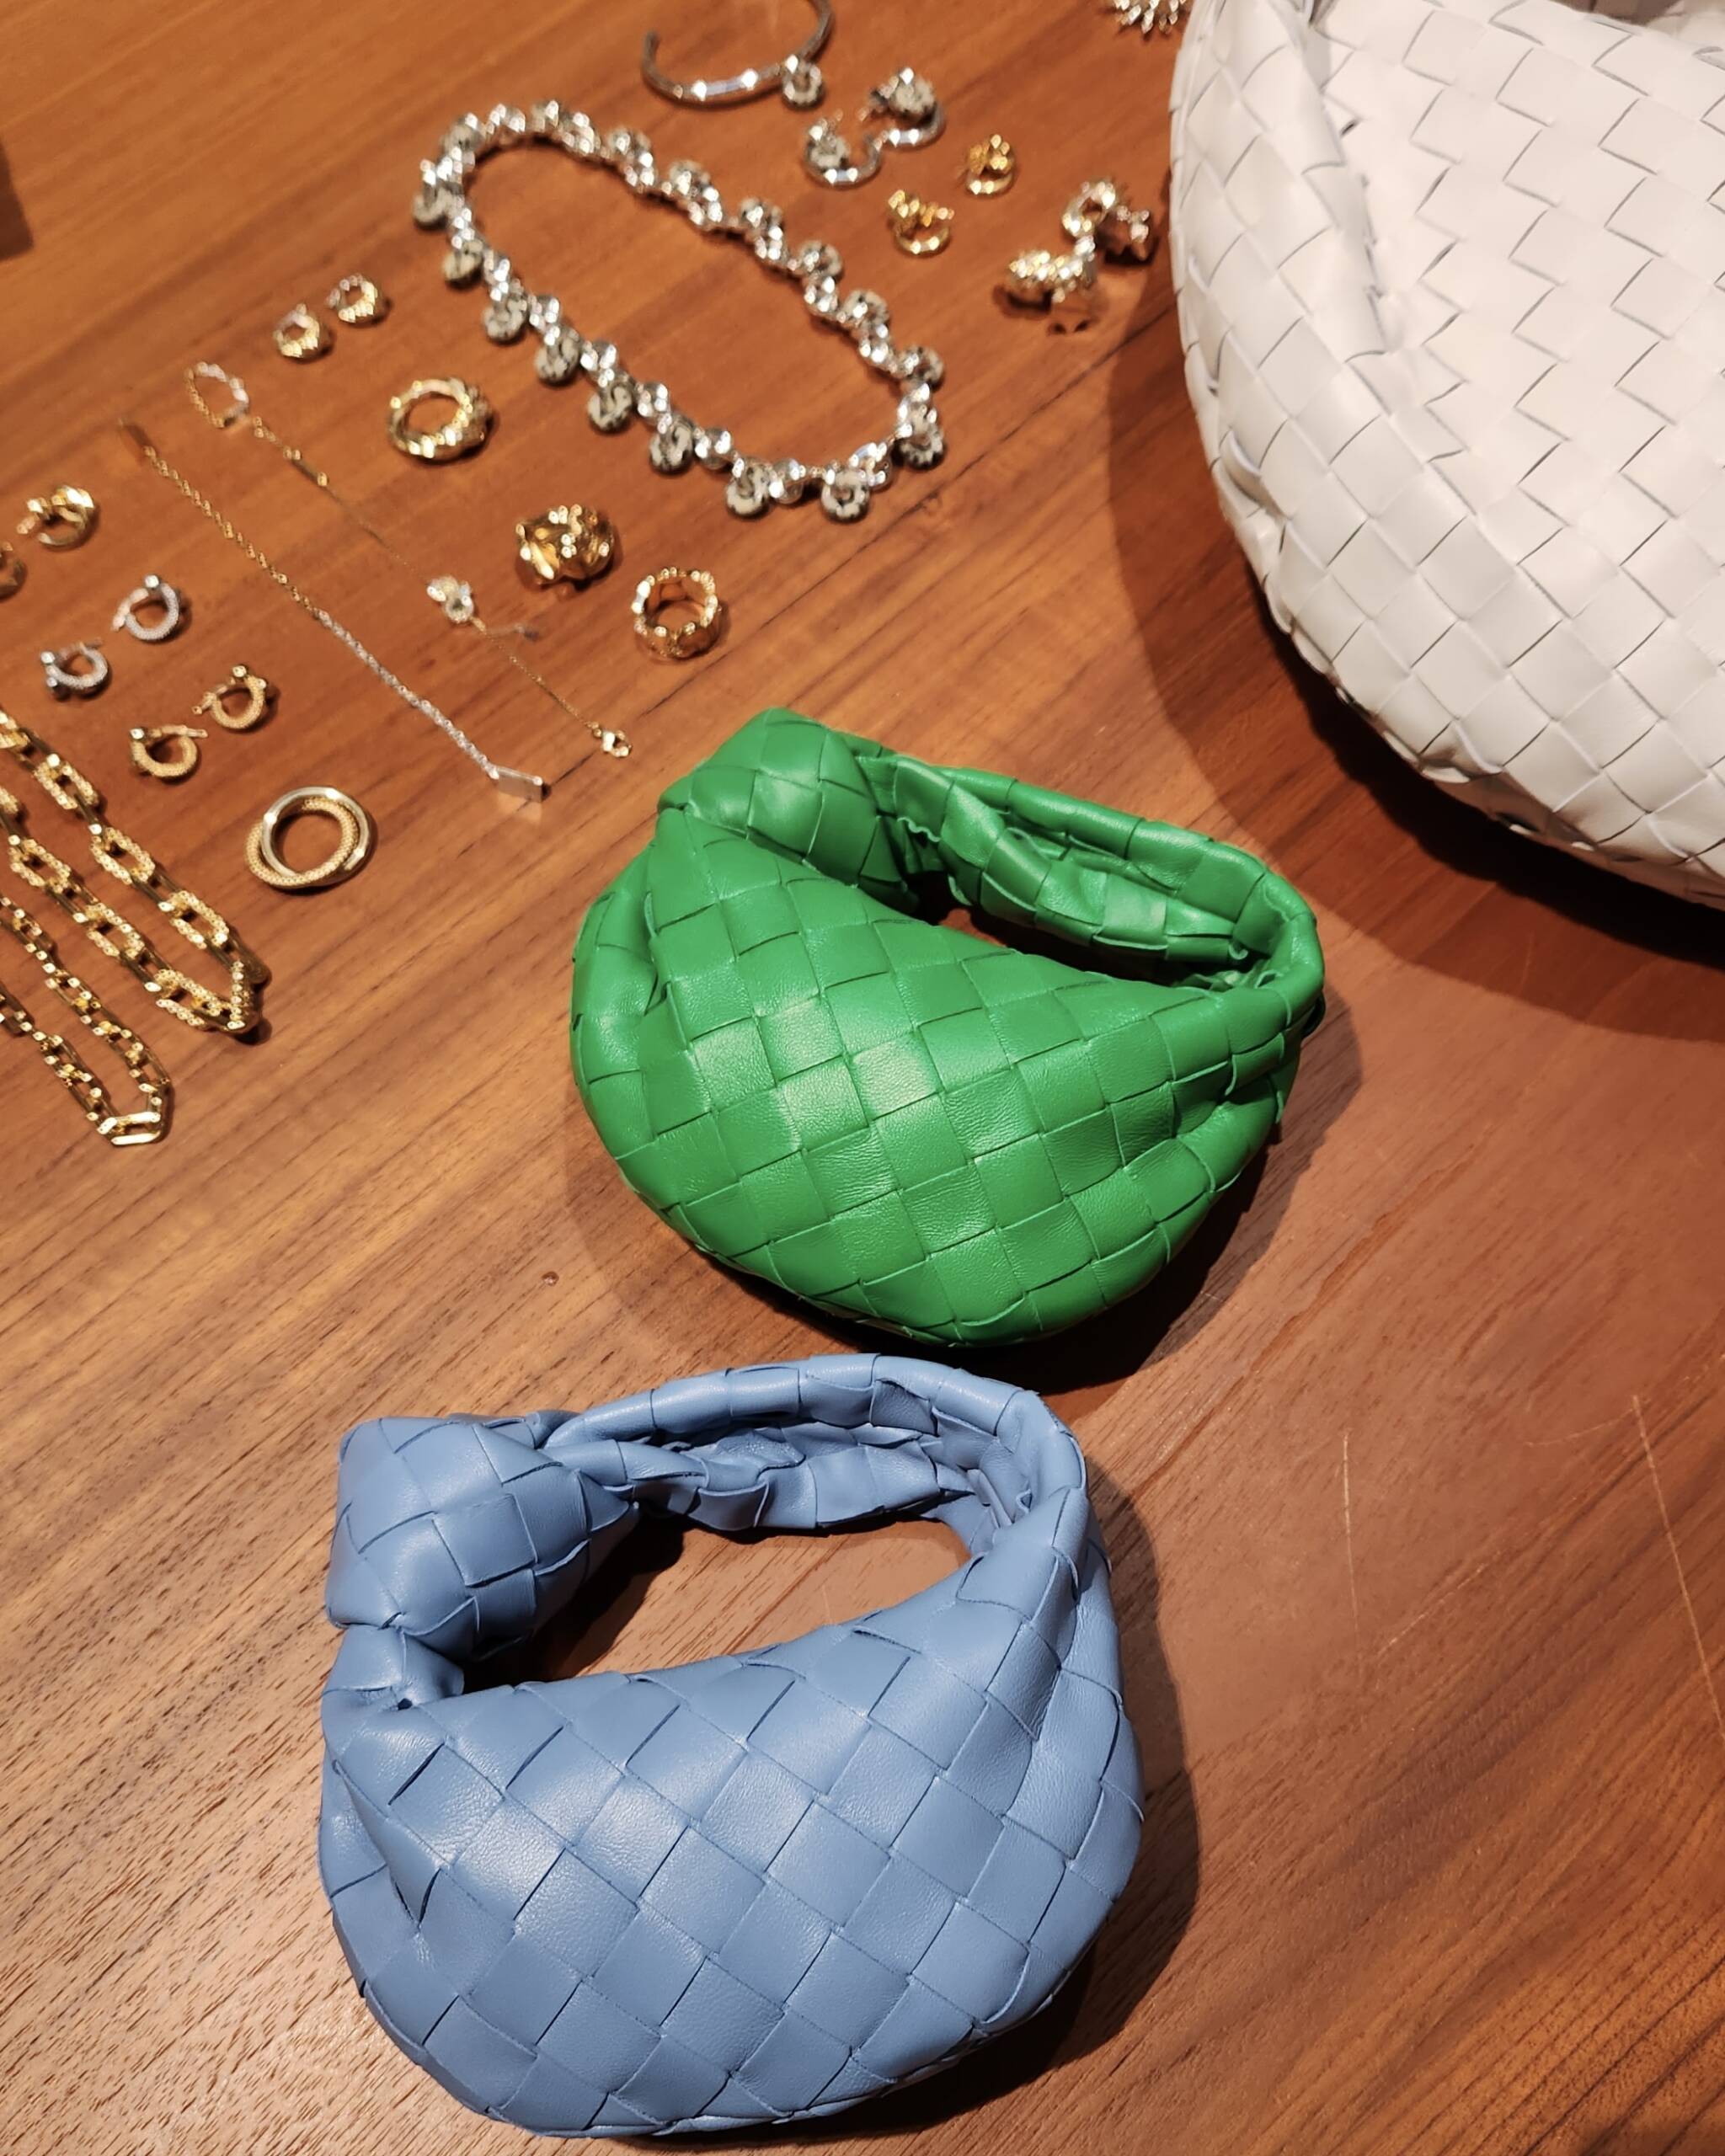 Candy Jodie Leather Shoulder Bag in Green - Bottega Veneta